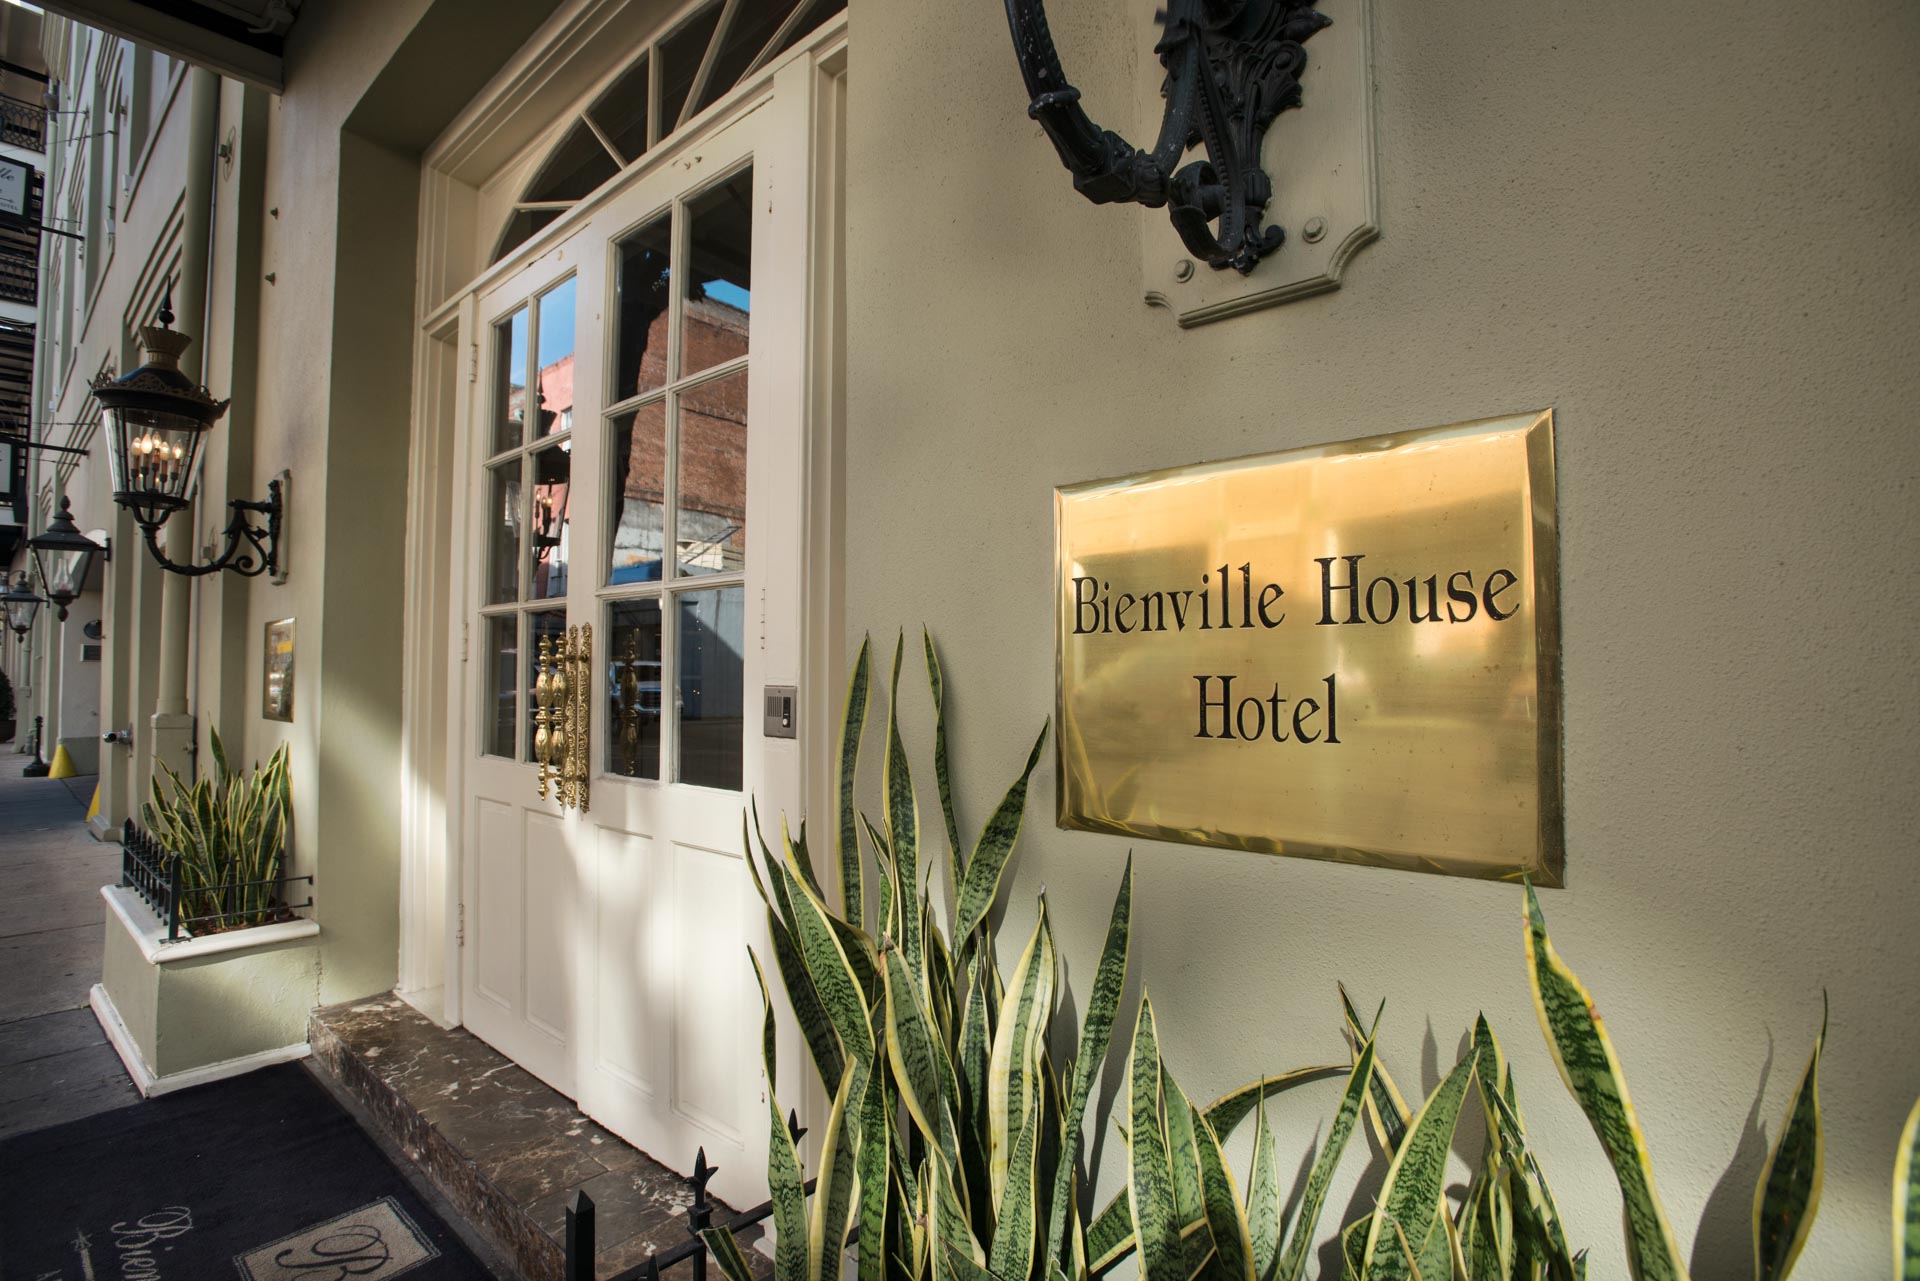 Bienville House Hotel Entrance